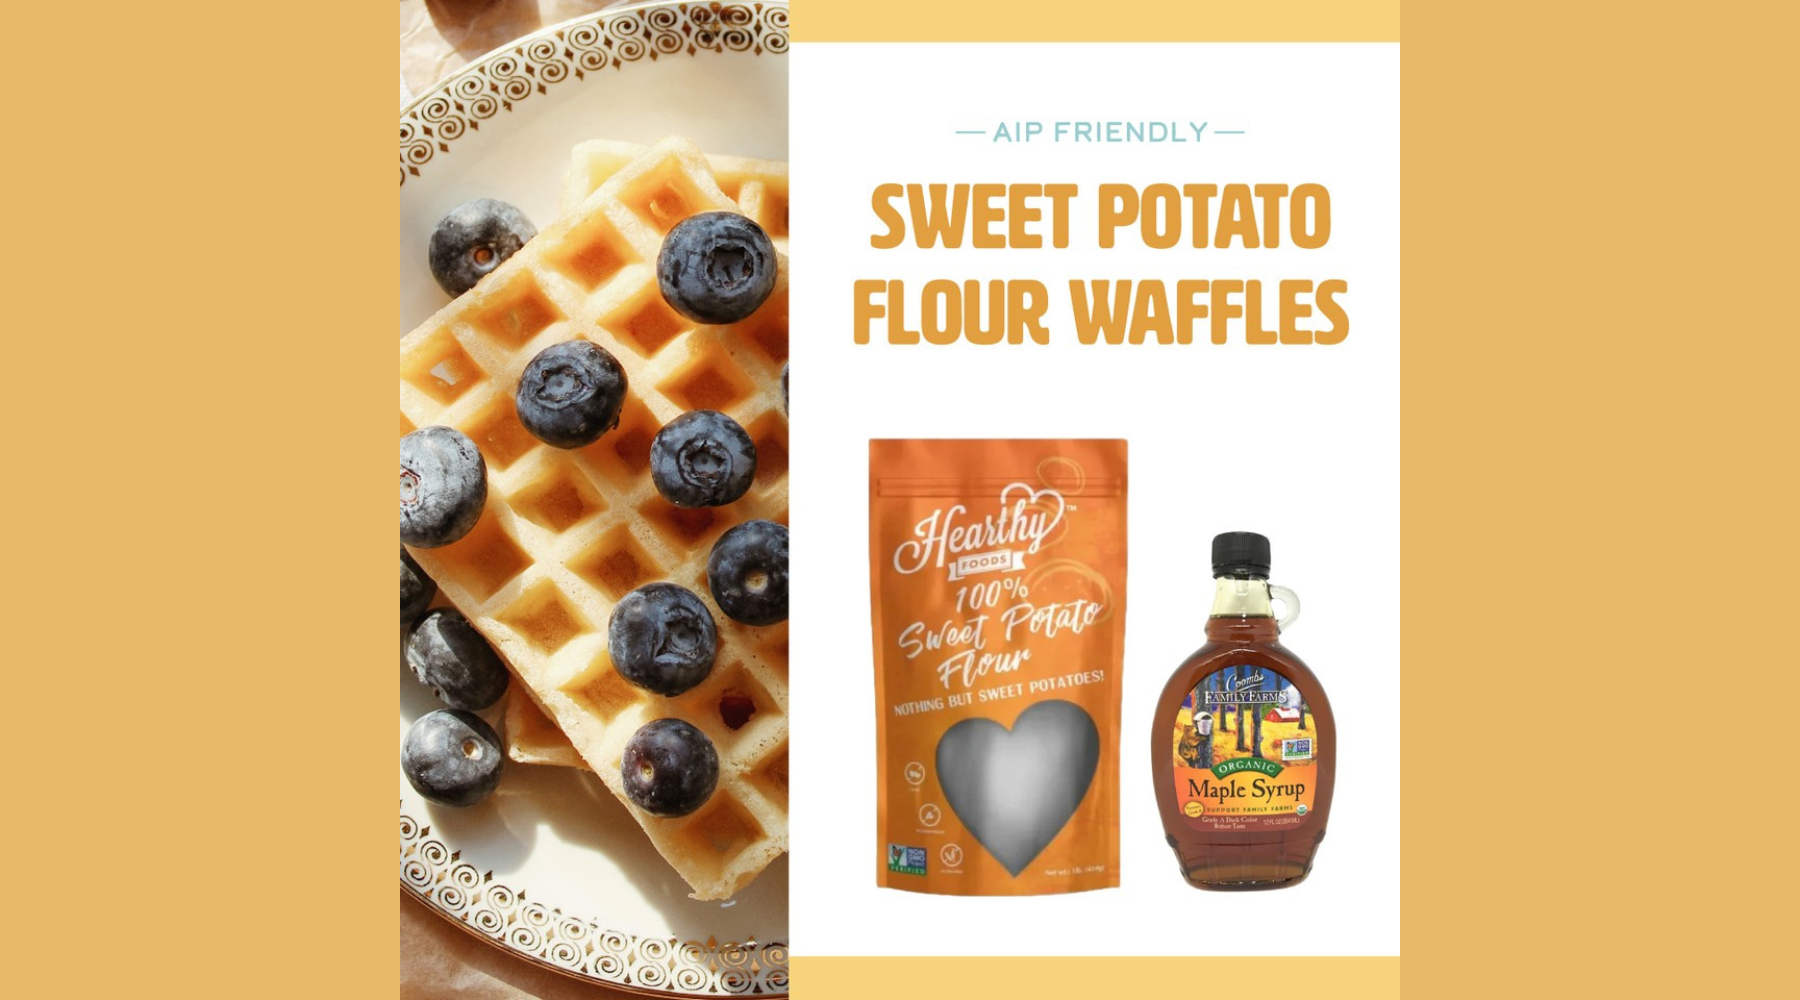 Hearthy Apple Sweet Potato Waffles